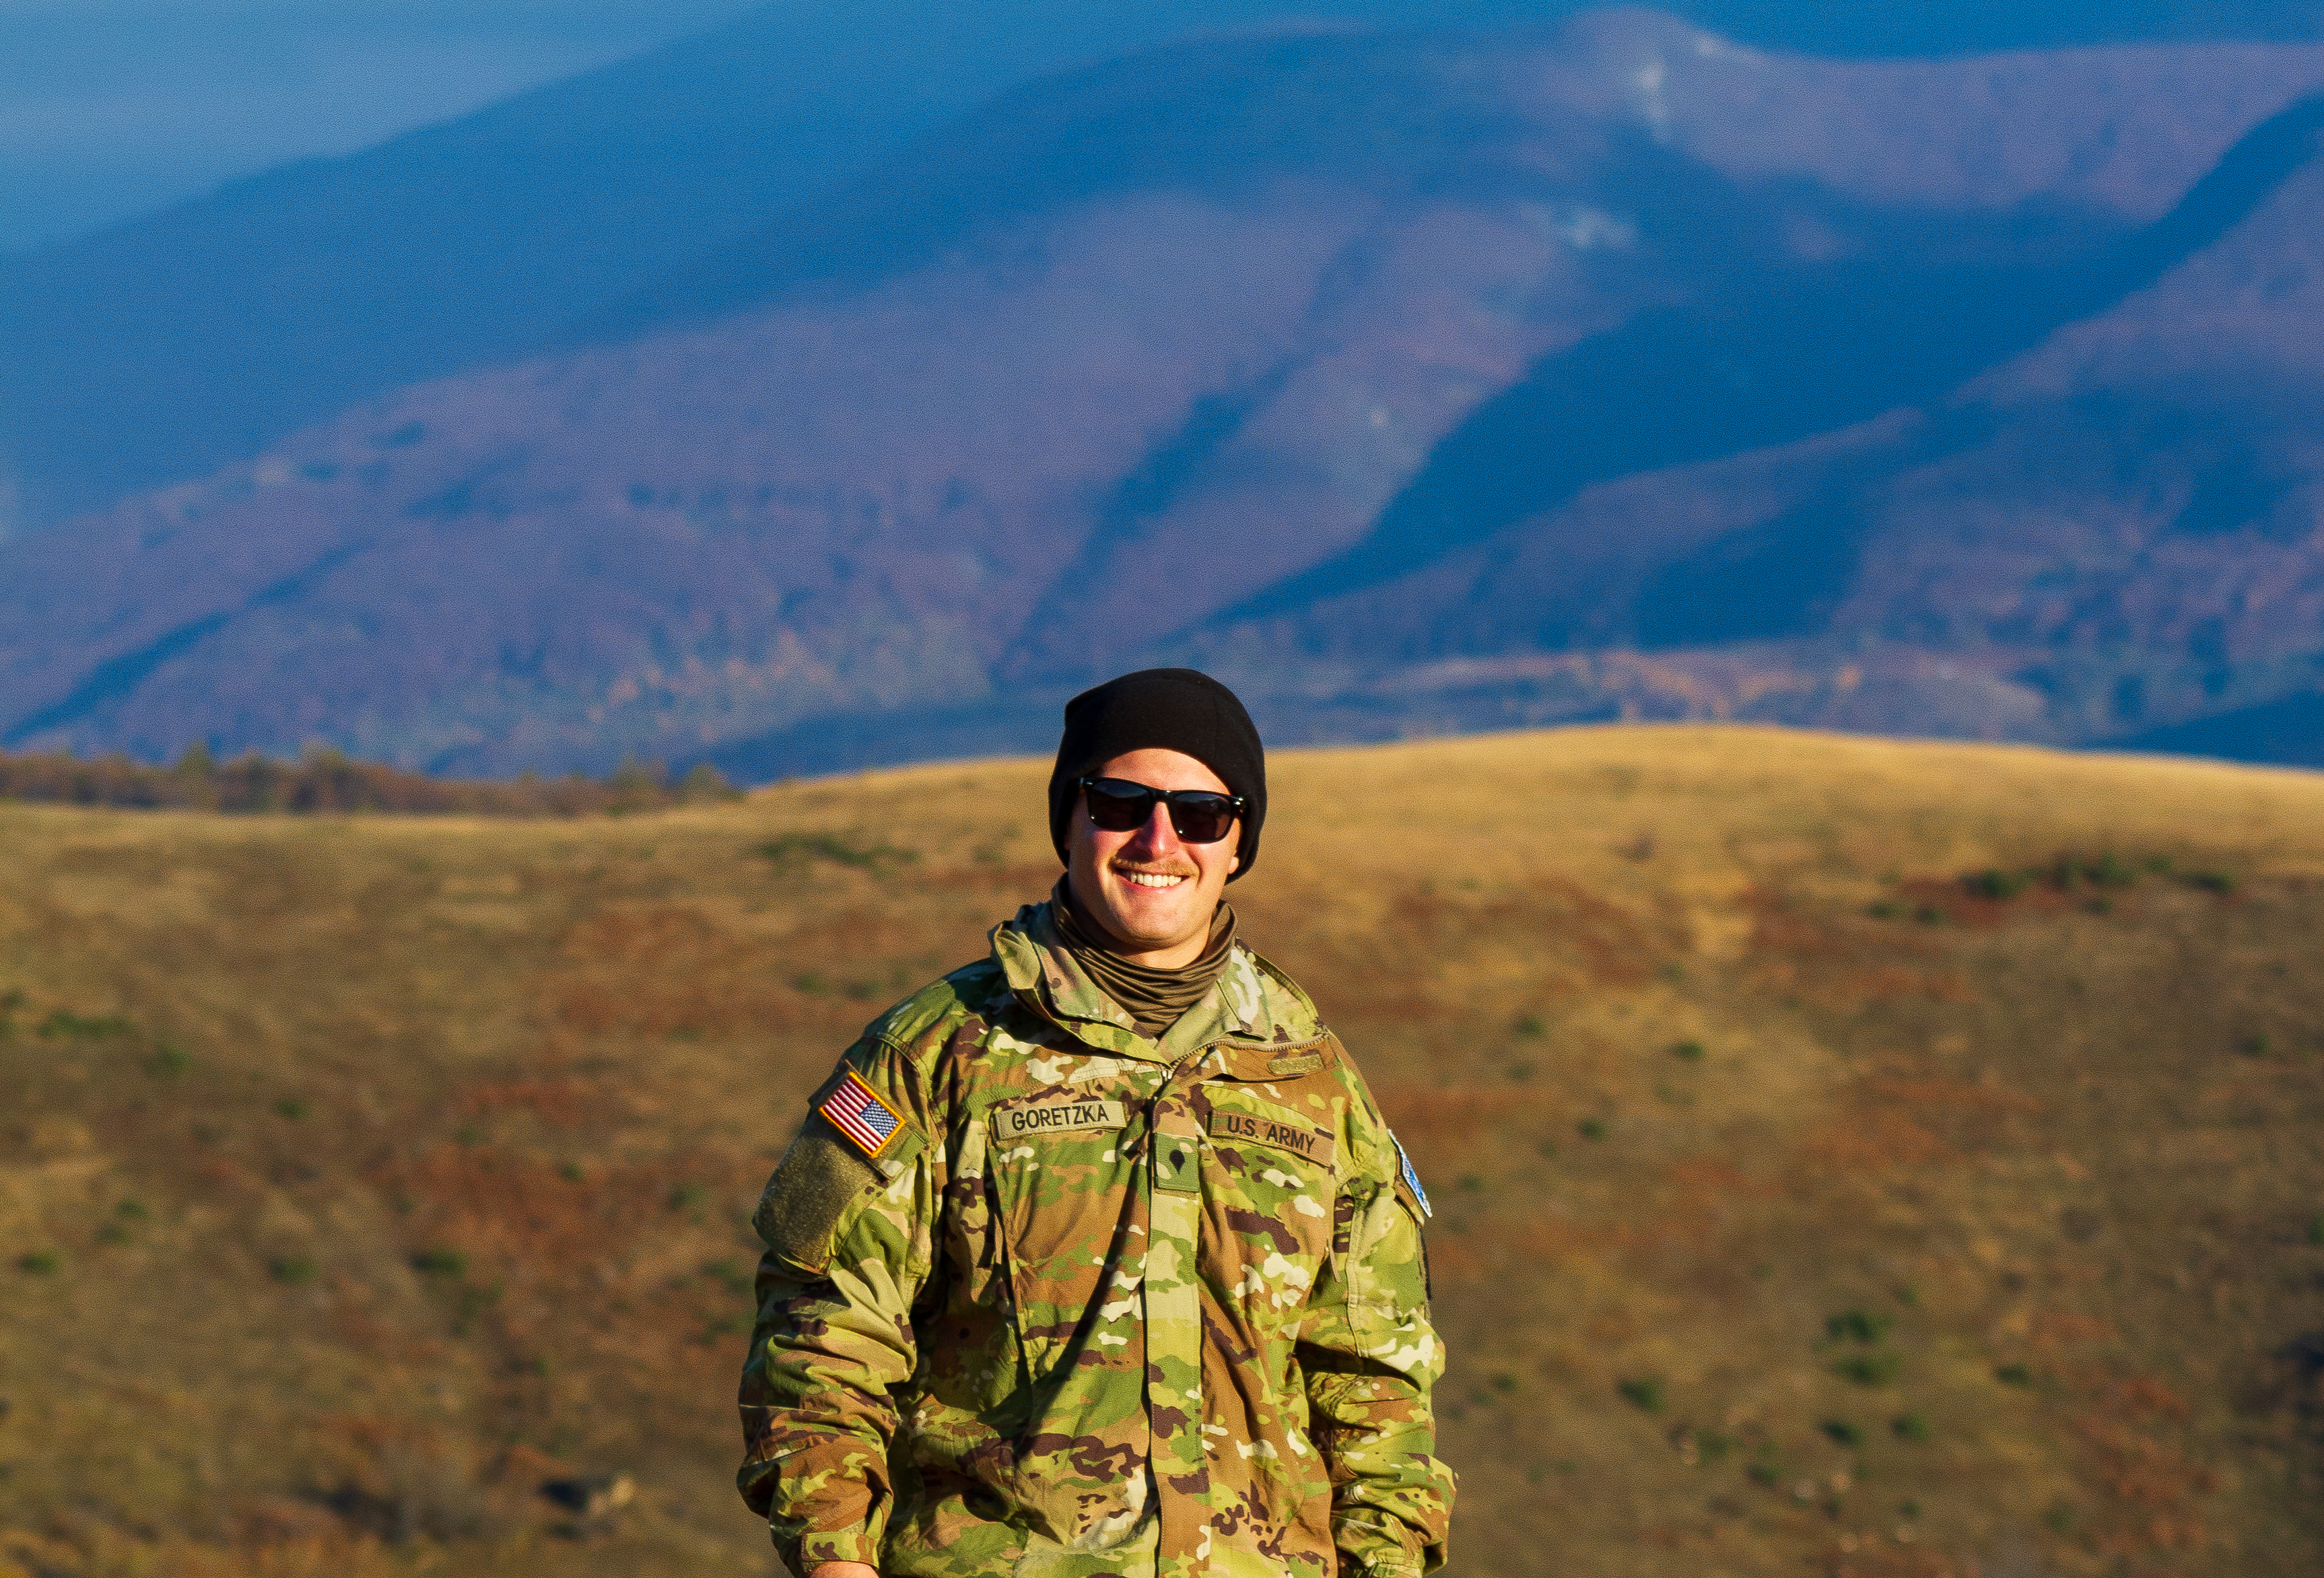 Drew in military uniform in Kosovar mountains